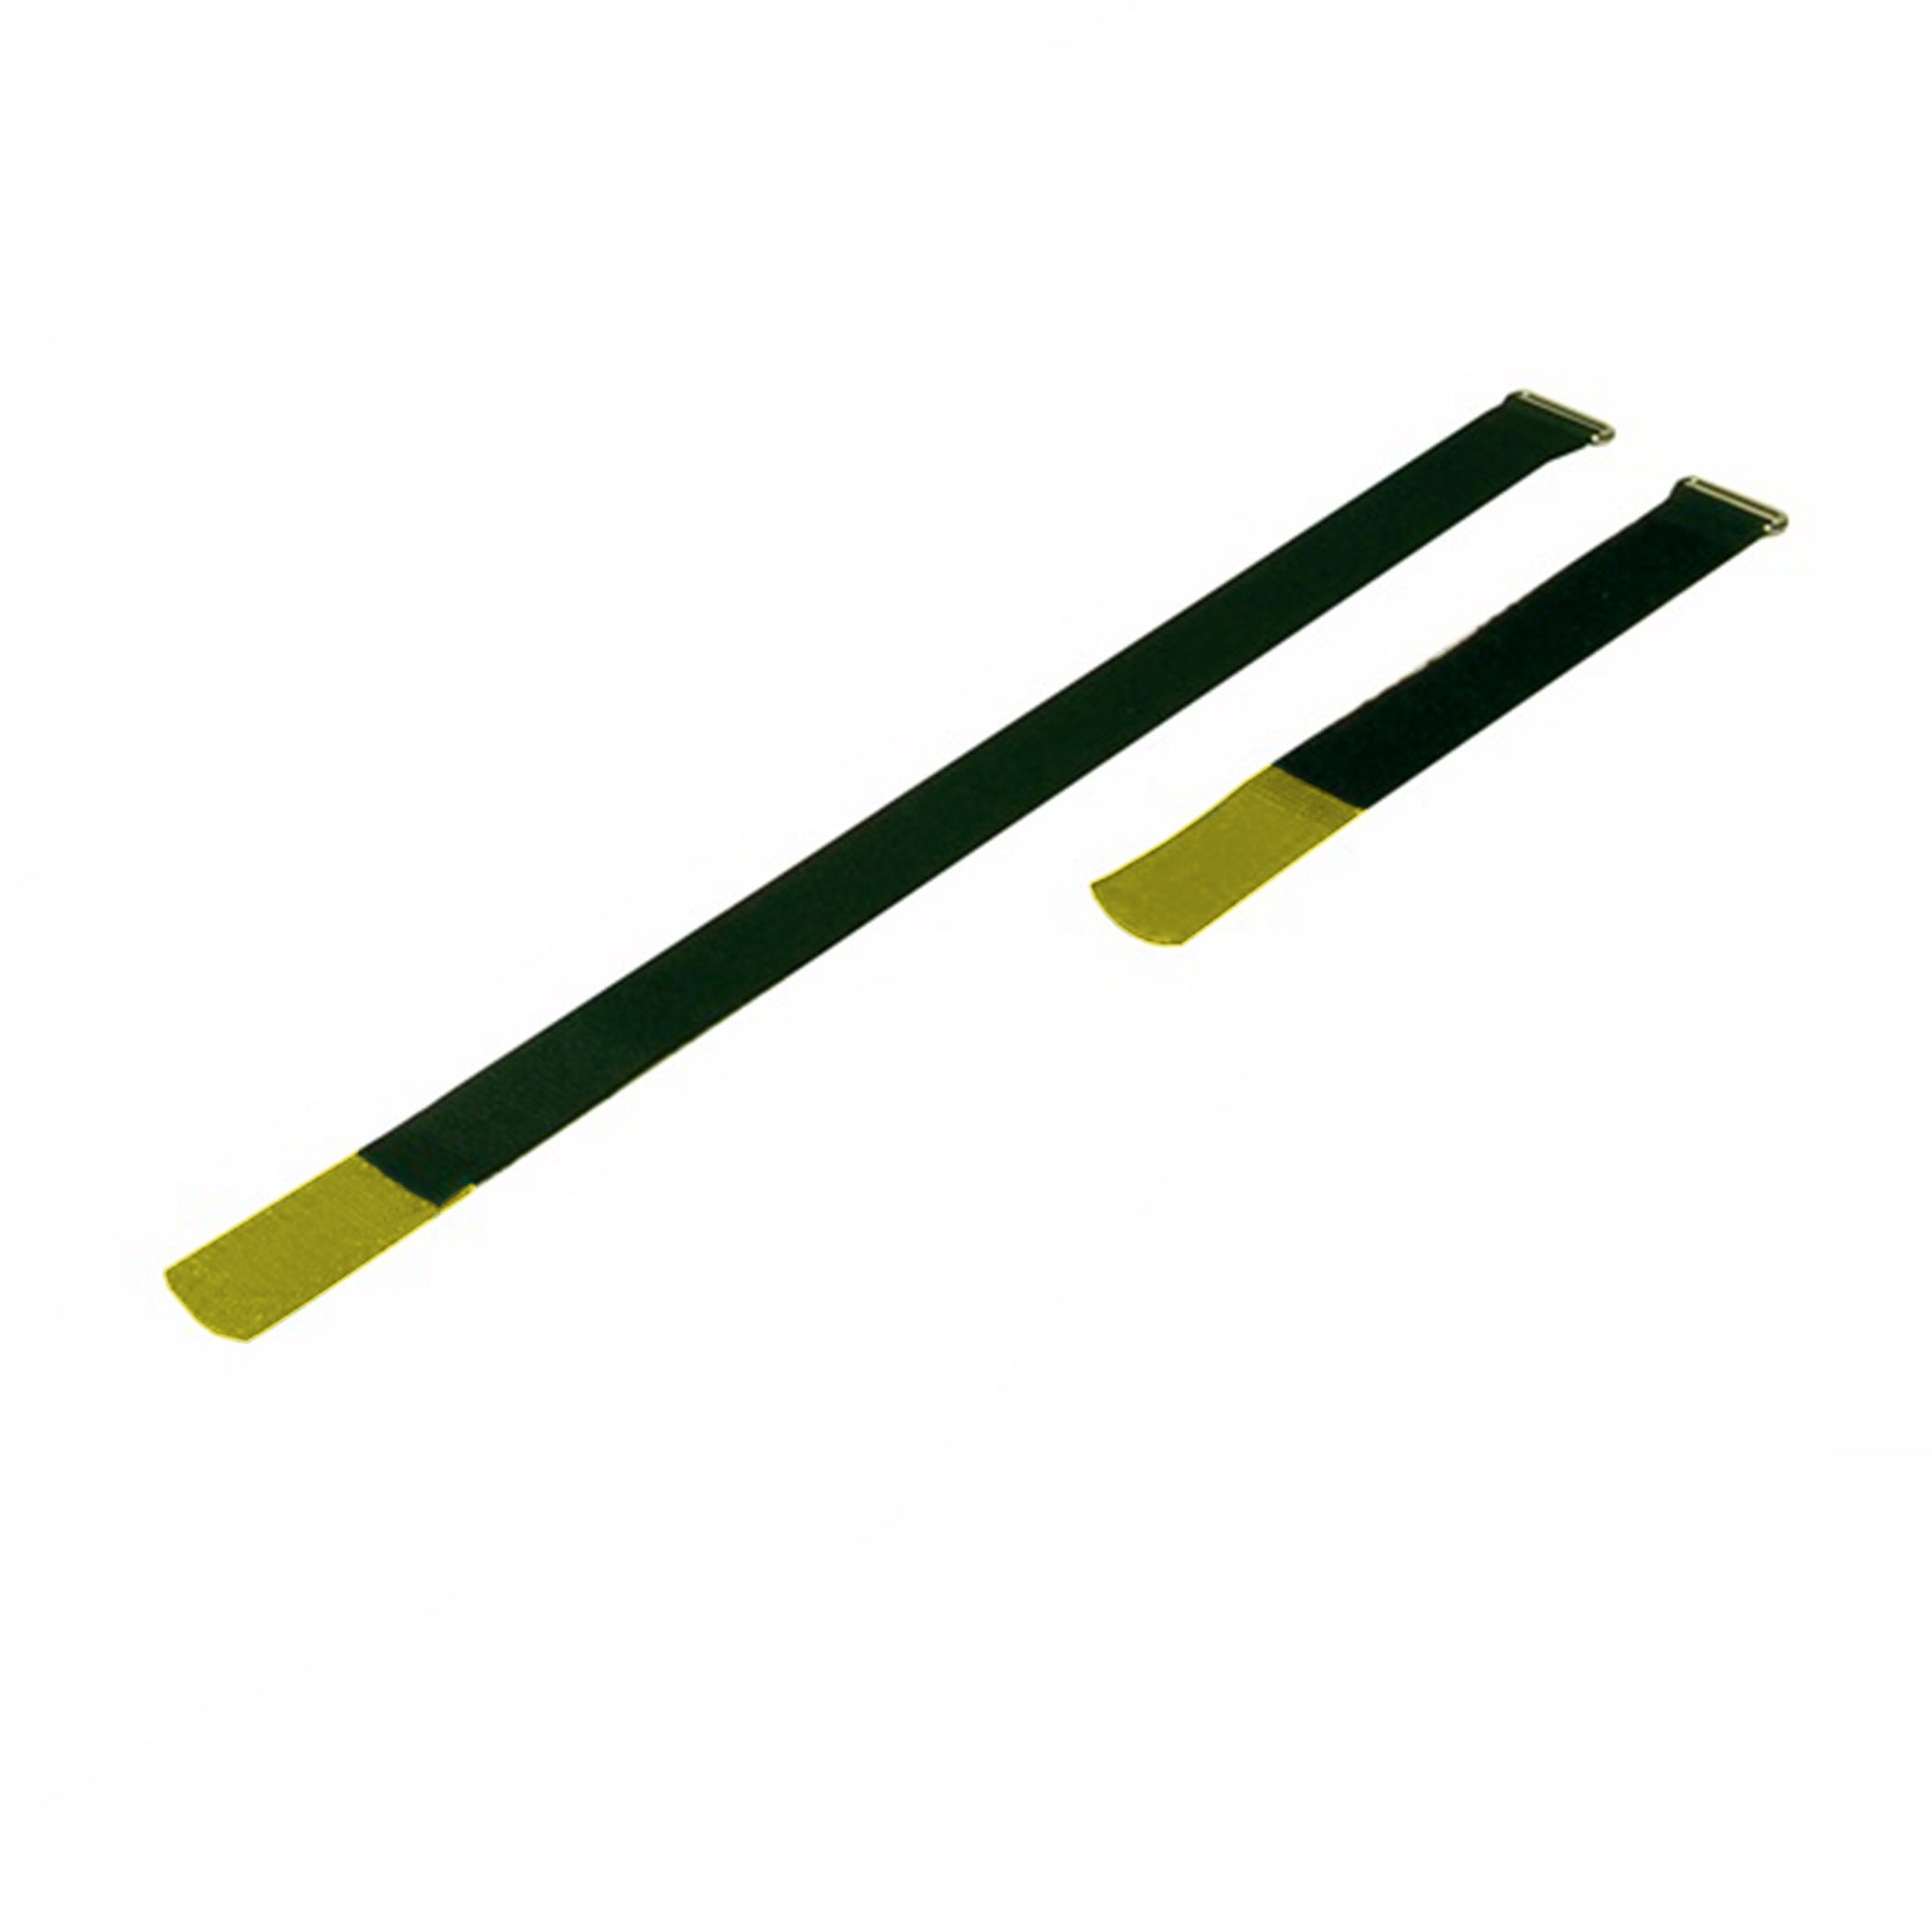 Kabelbinder 170x25mm met haaktip geel, (10 stuks) - a2517-700h